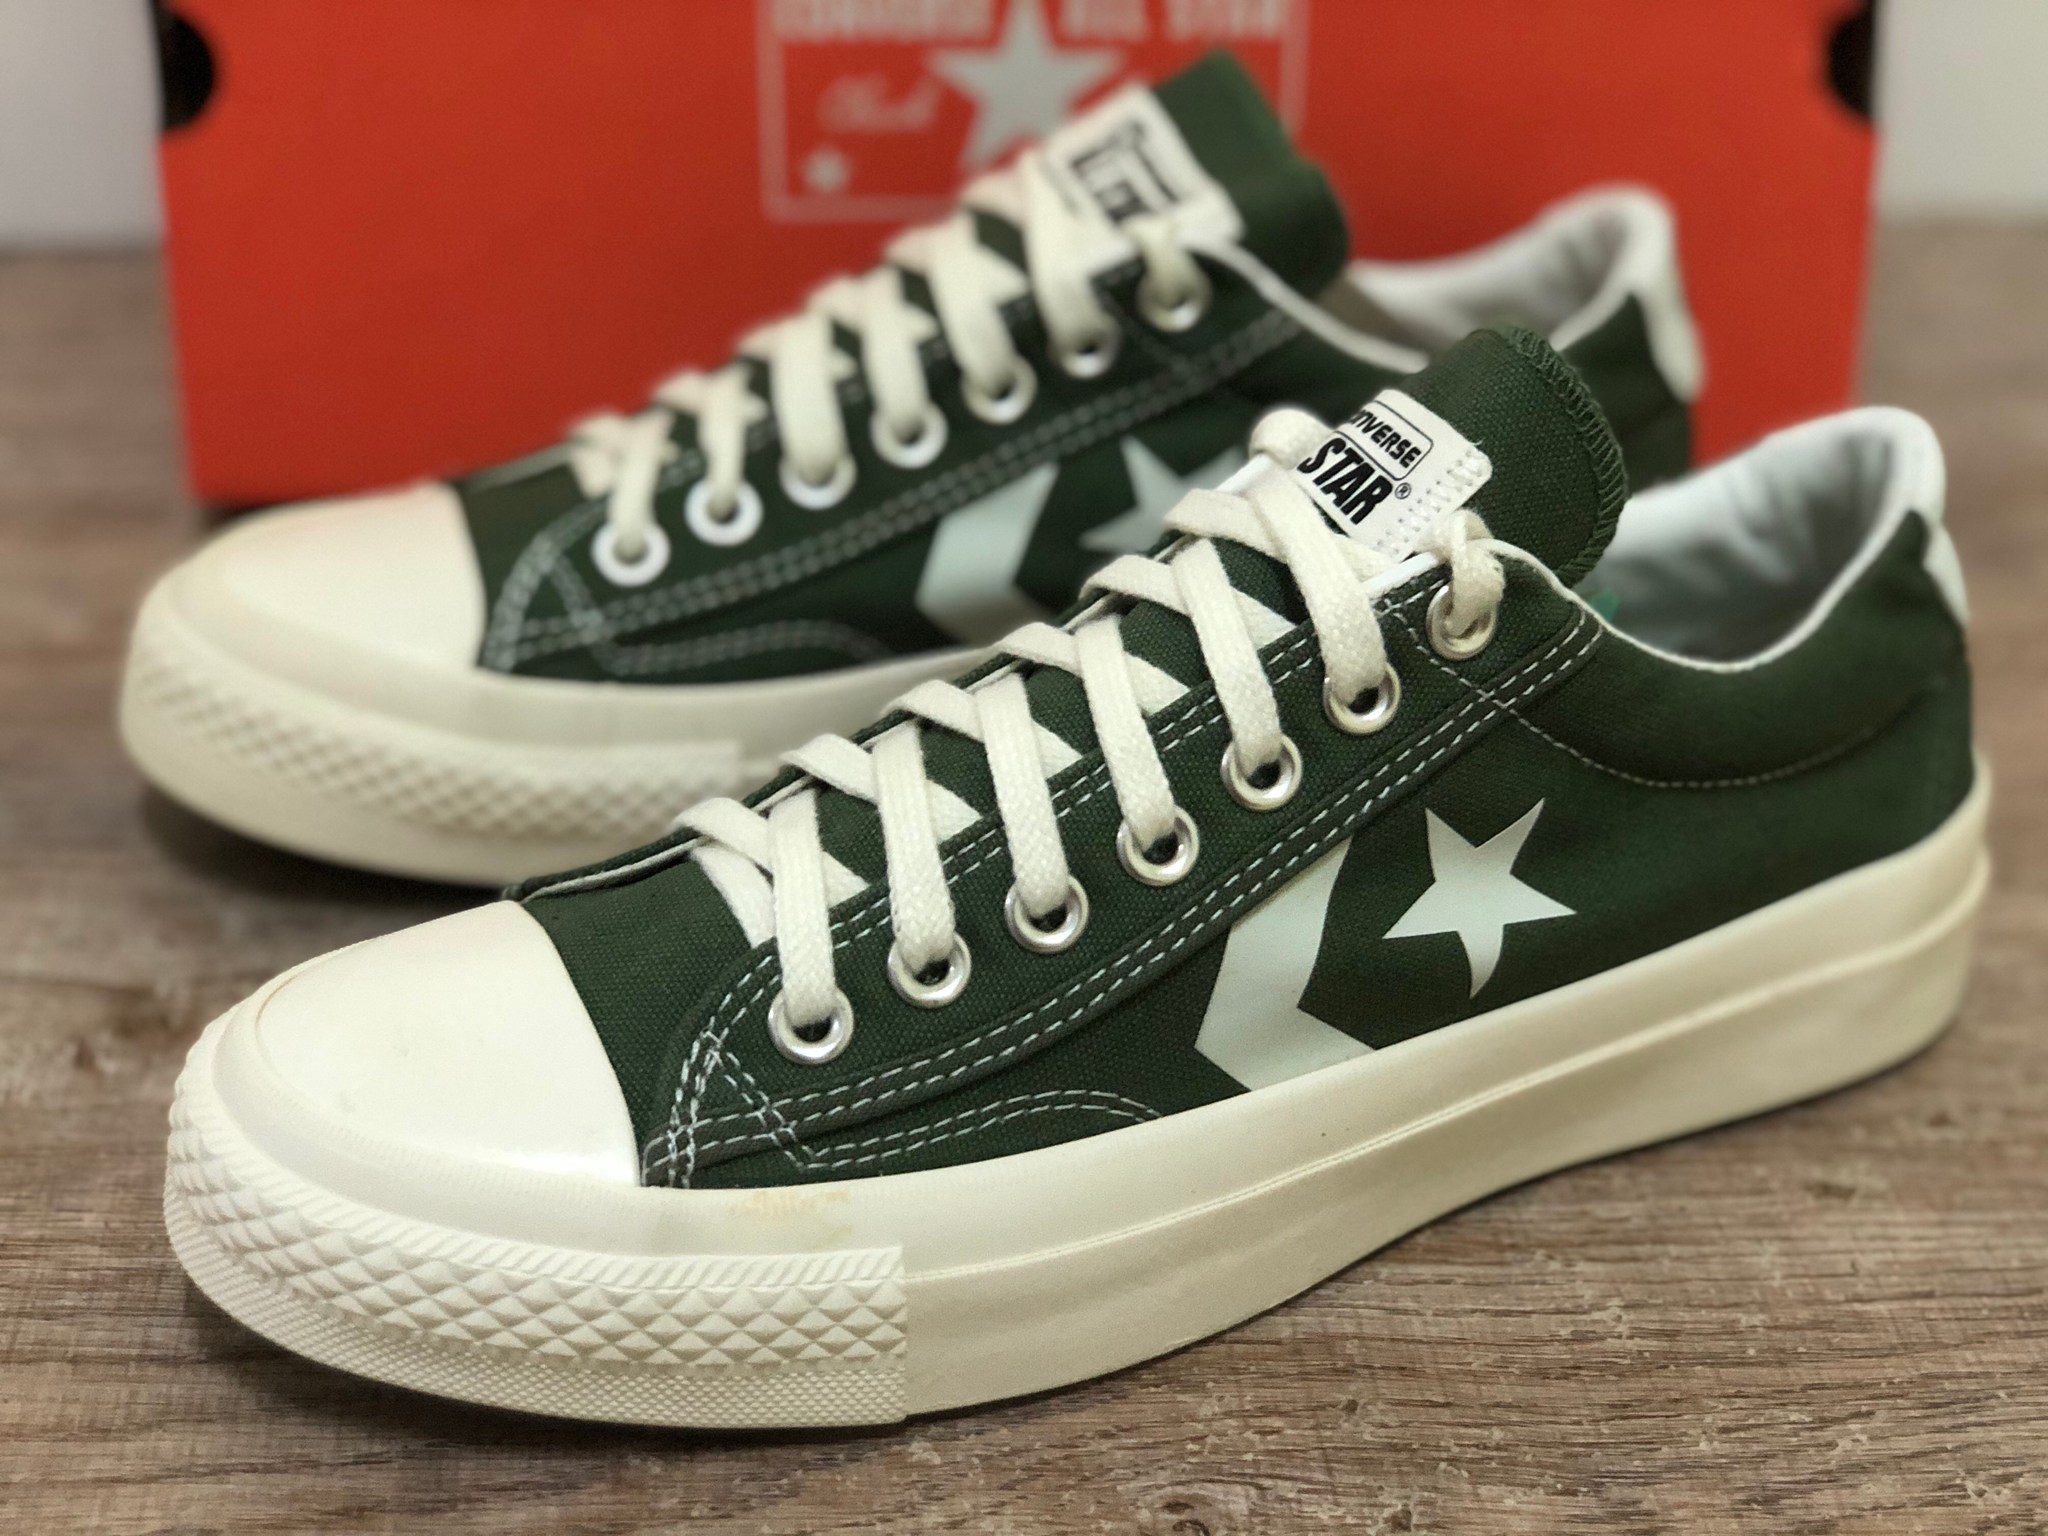 [MShose] รองเท้าConverse One Star Dark Vintage Green รองเท้าผ้าใบ รองเท้าลำลอง รองเท้าแฟชั่น สินค้าพร้อมกล่อง